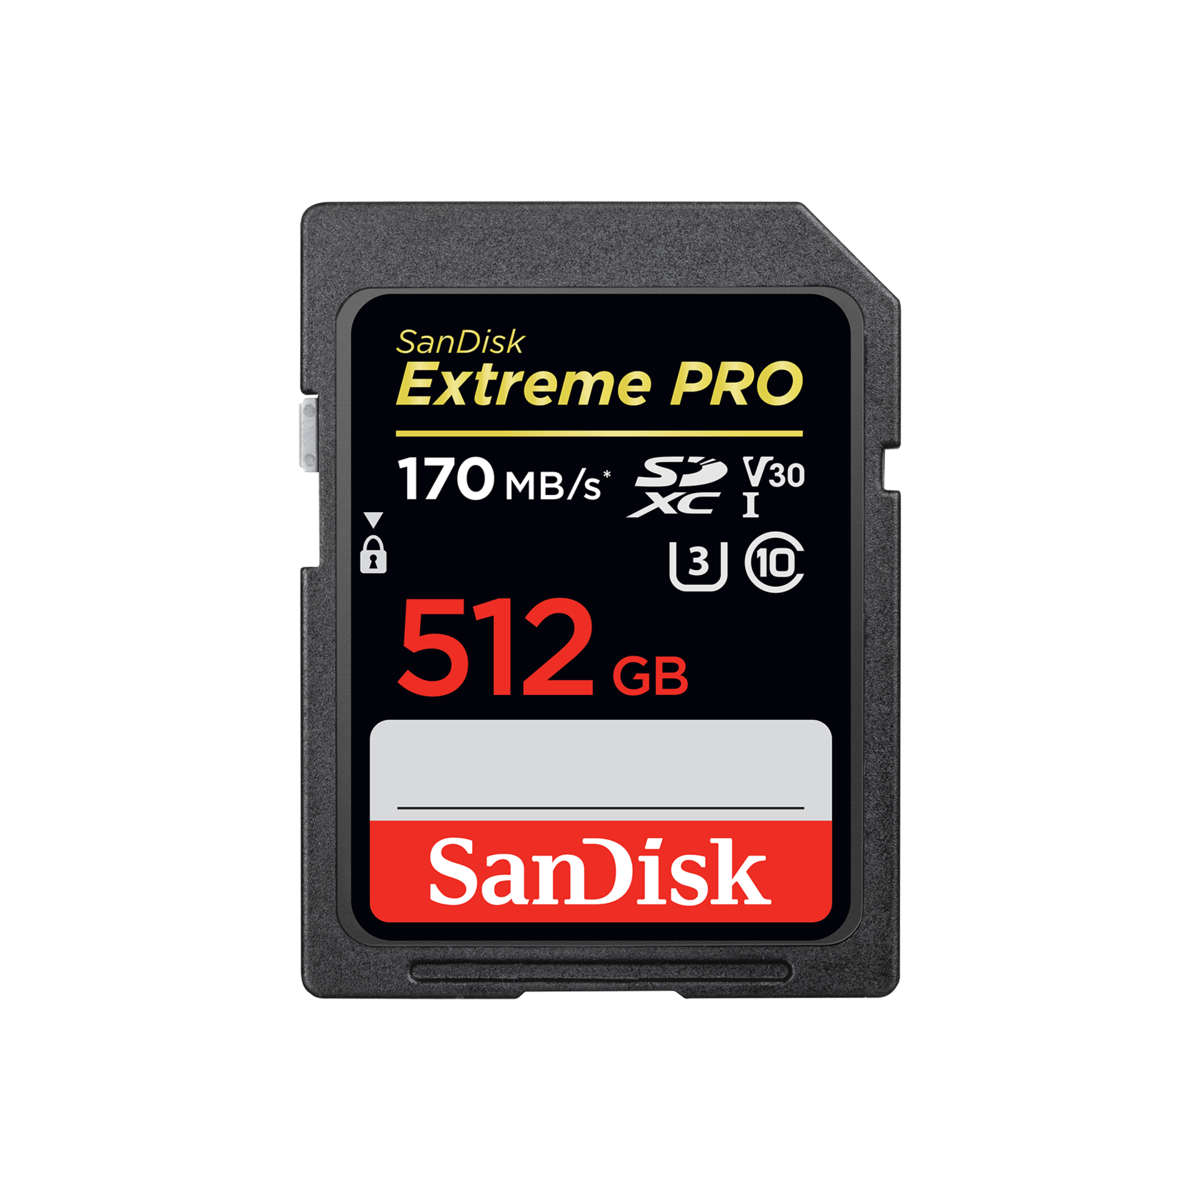 U3 V30 Classe 10 Velocità di Lettura fino a 170 MB/s SanDisk Extreme PRO Scheda di Memoria SDXC da 512 GB